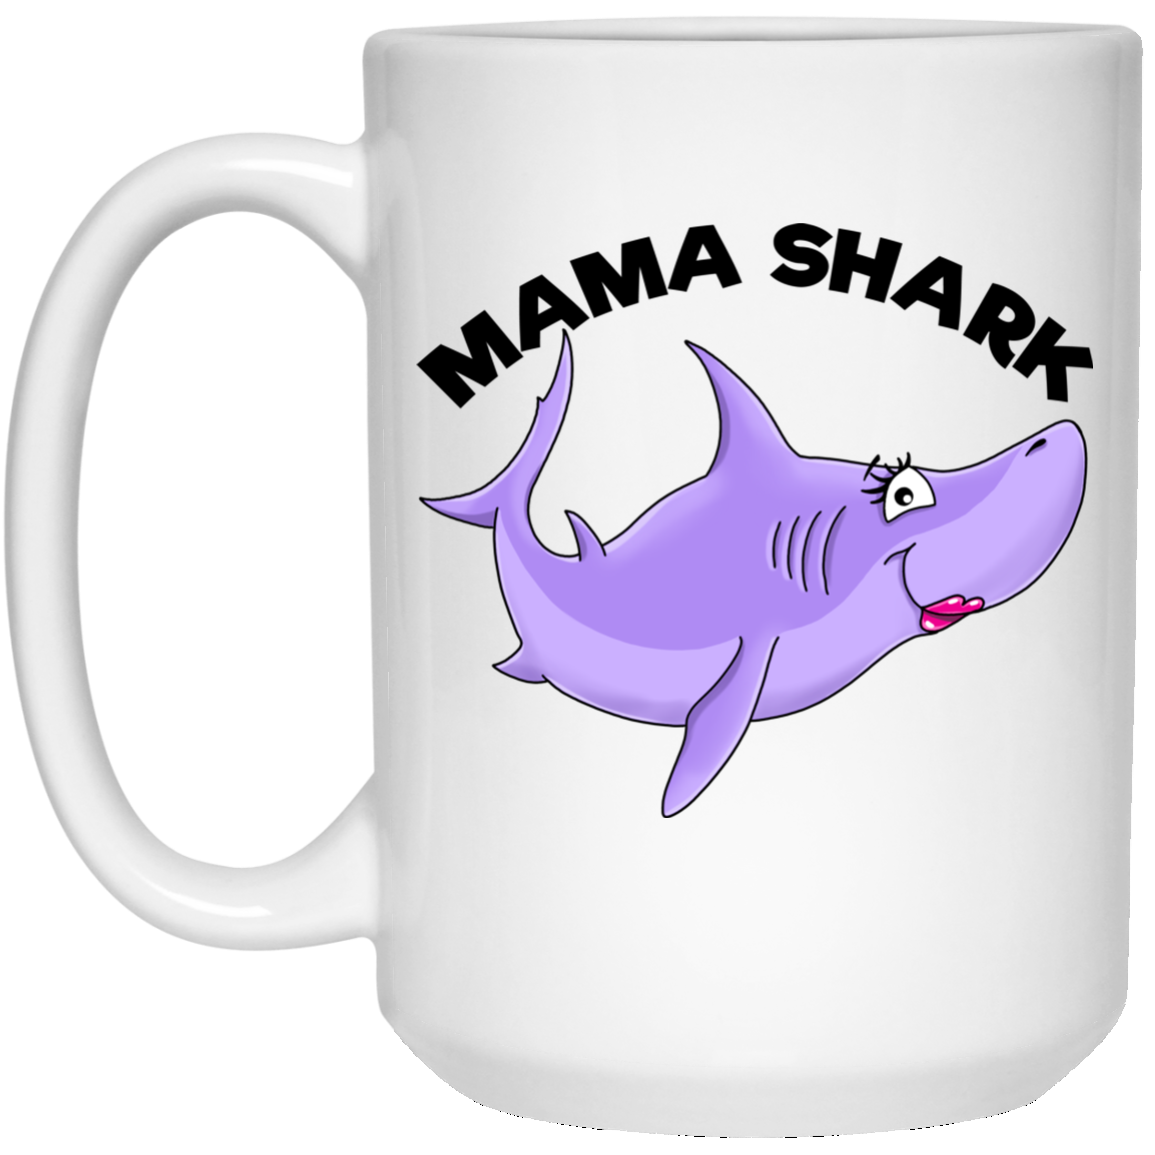 Mama Shark Mug - Shark Family - Gifts for Mom - GoneBold.gift